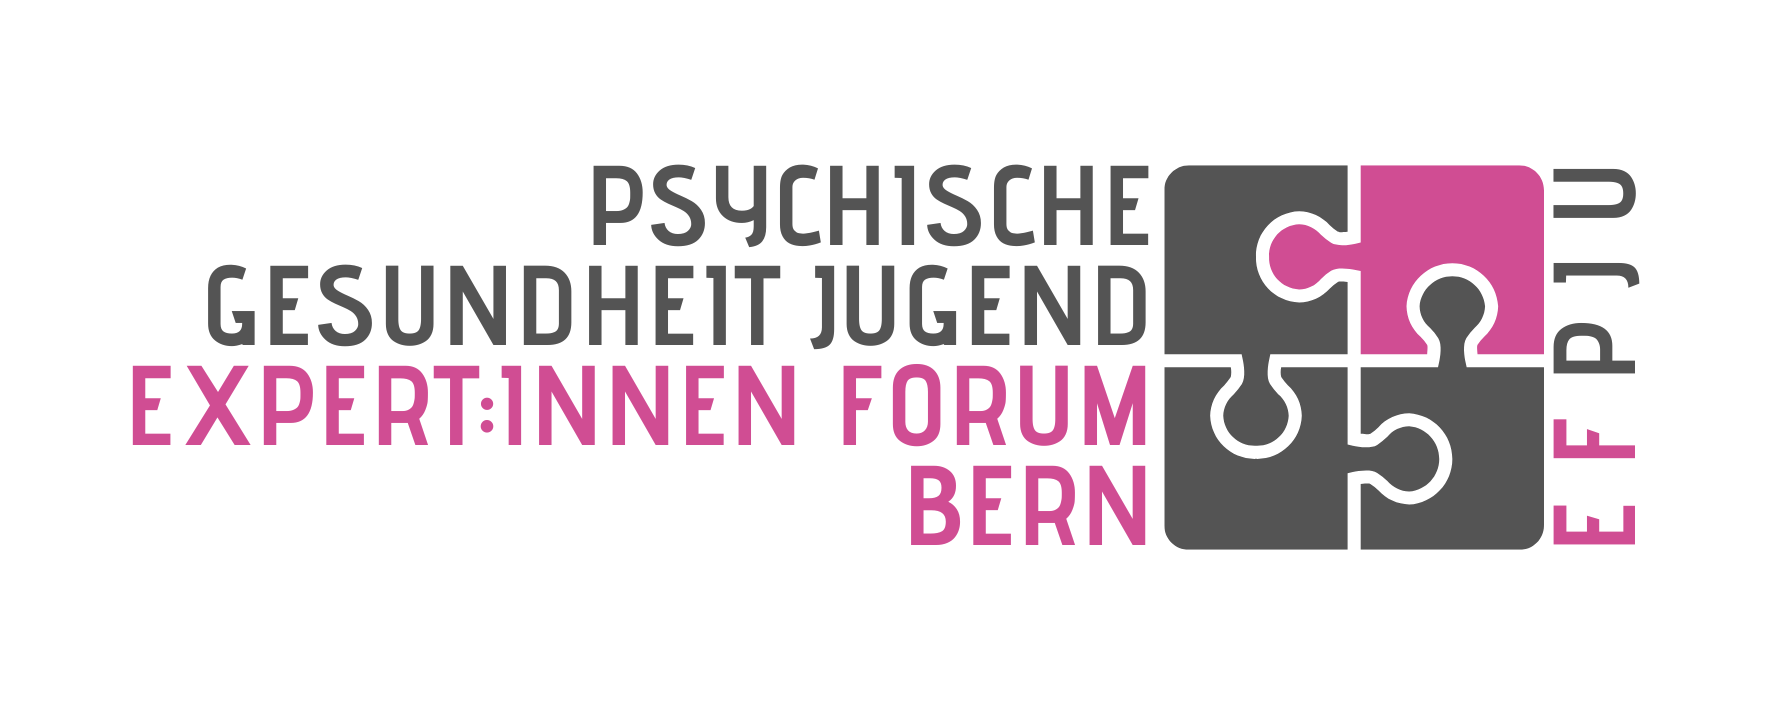 Interprofessionelles Expert:innen Forum Psychische Gesundheit Jugend